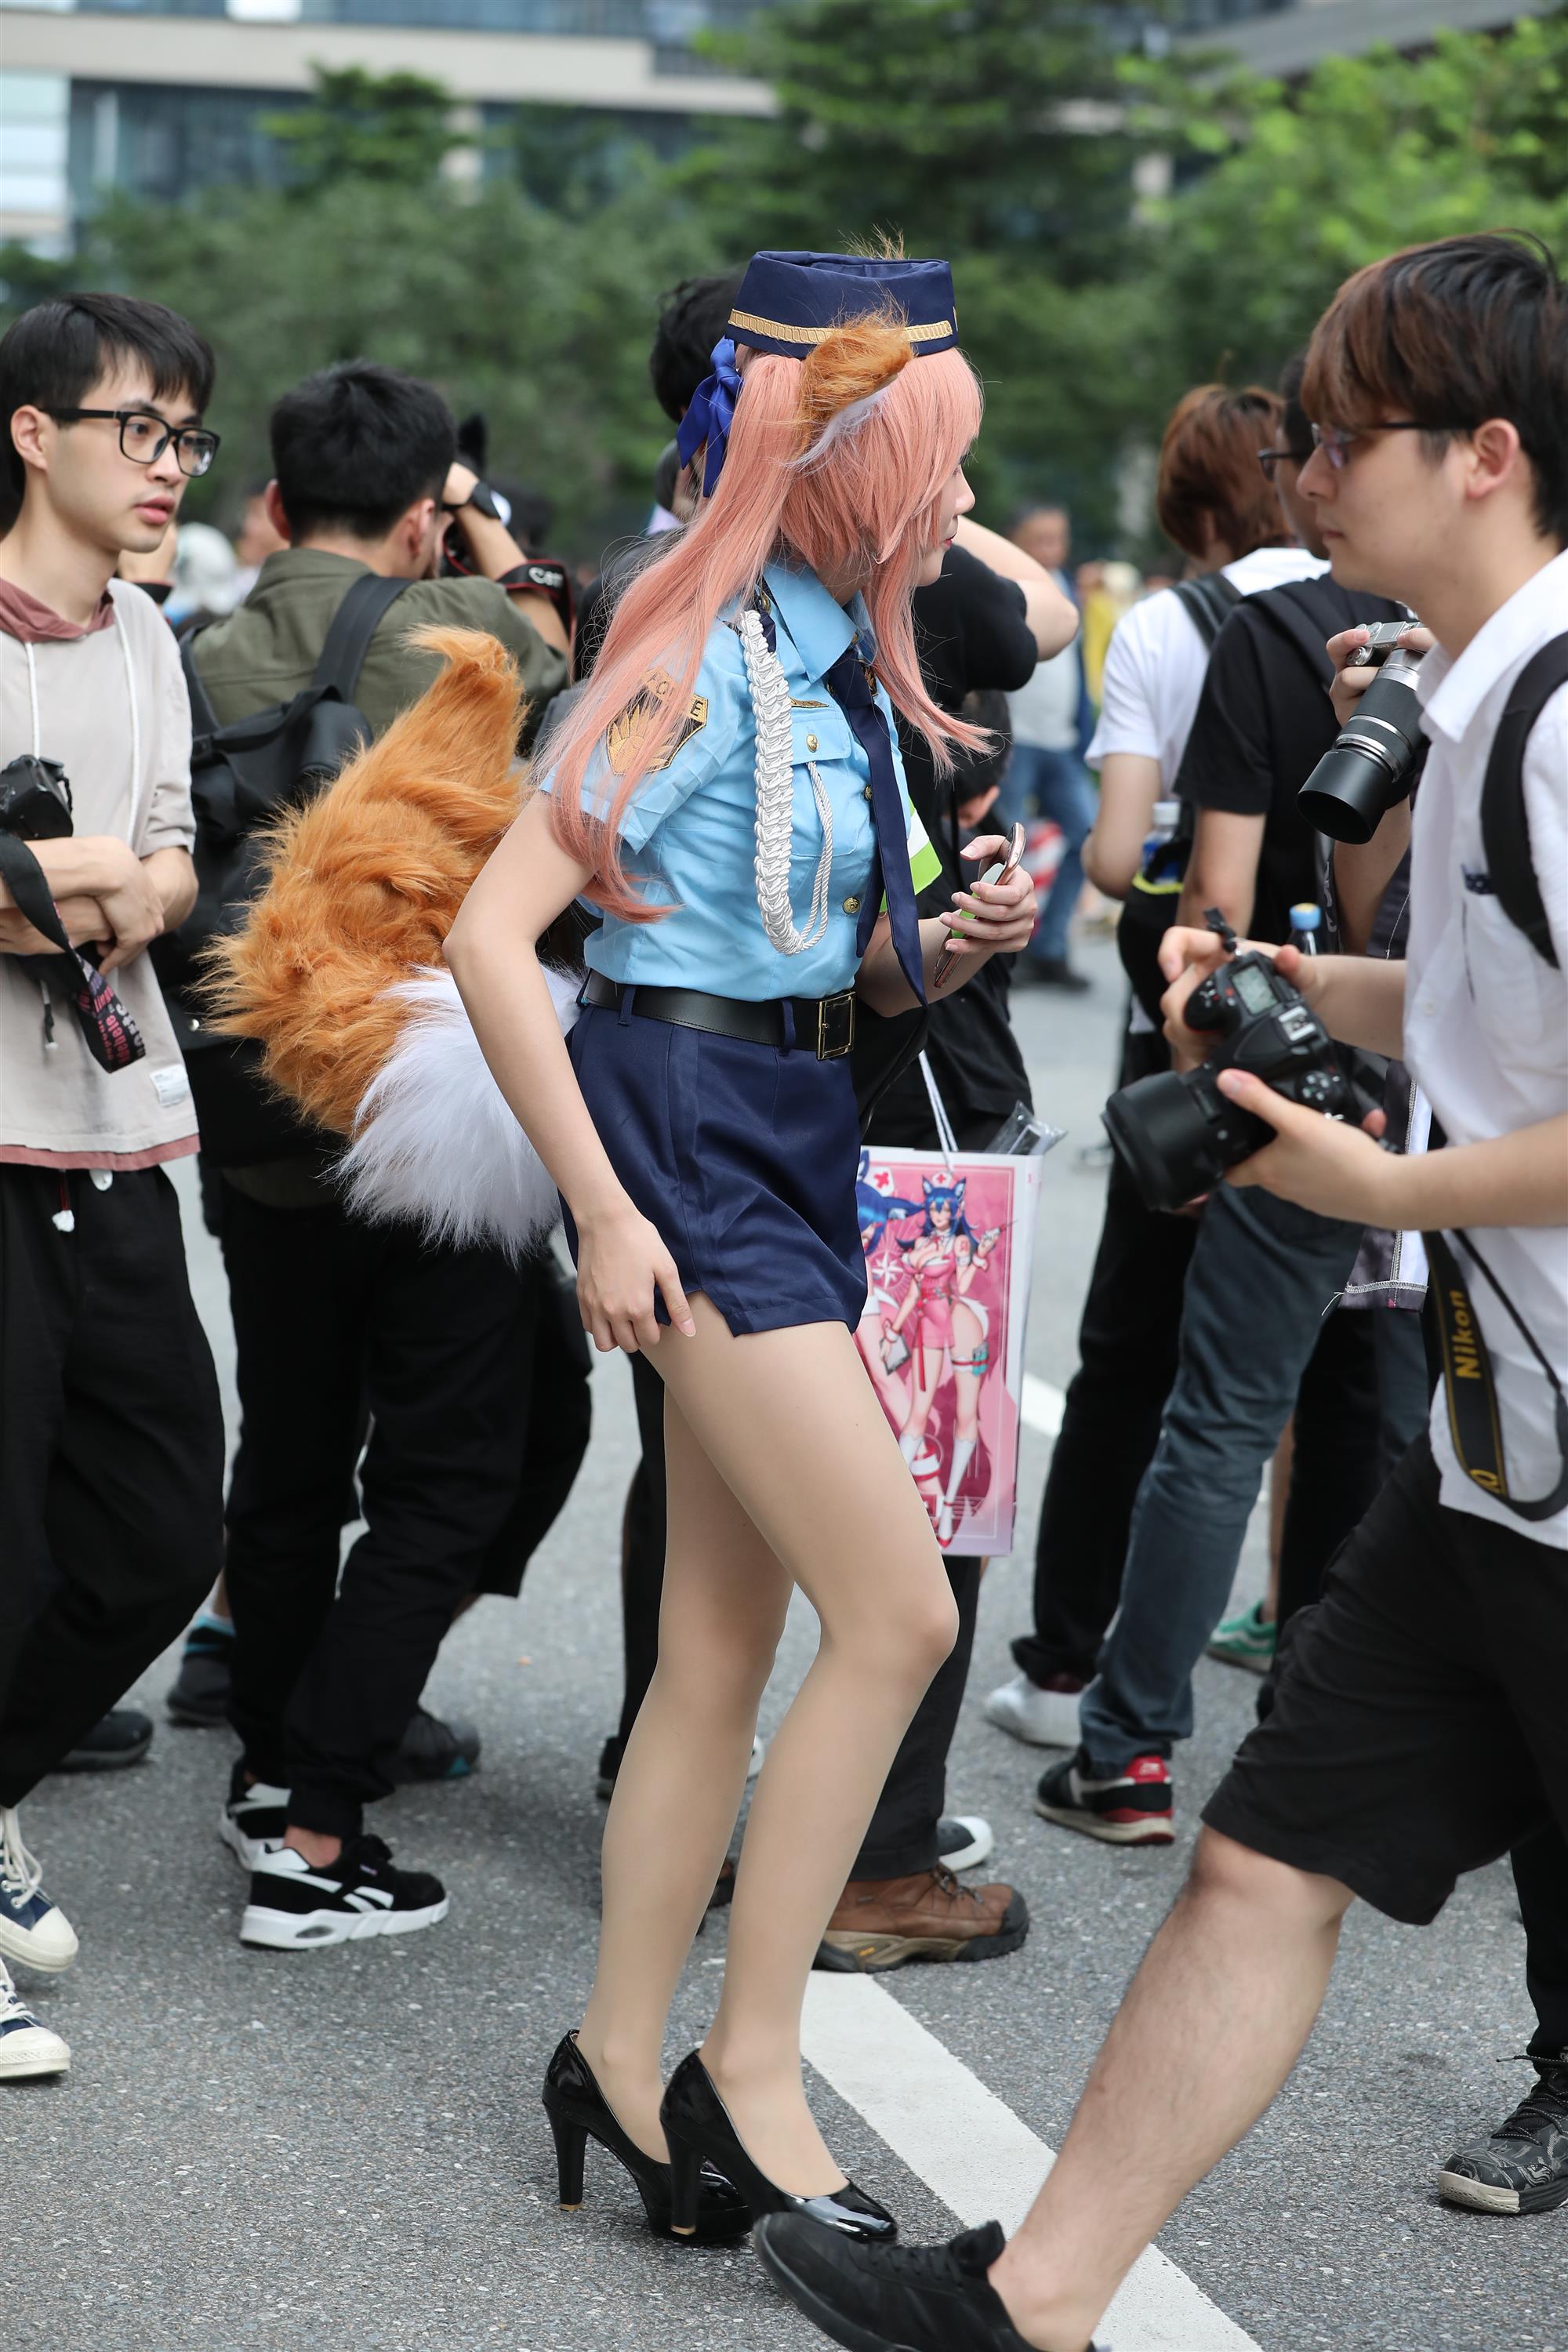 Street cosplay girl - 9.jpg